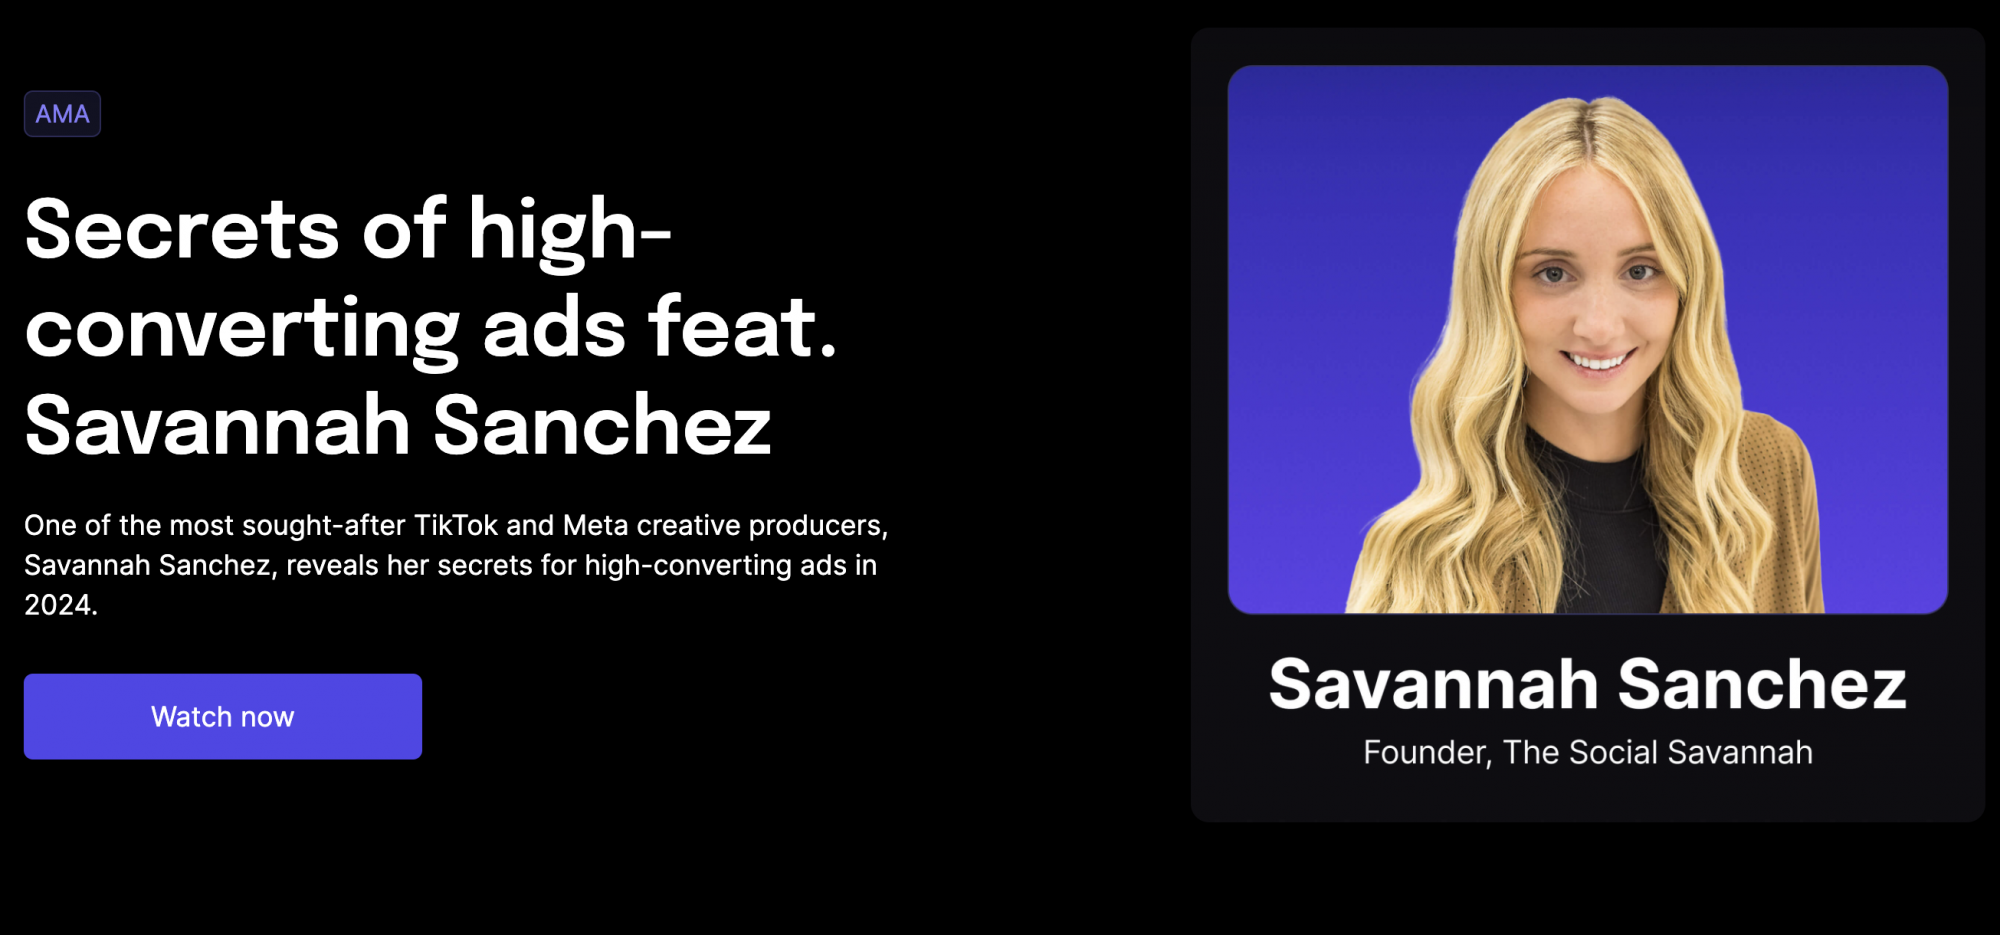 Secrets of high-converting ads feat. Savannah Sanchez